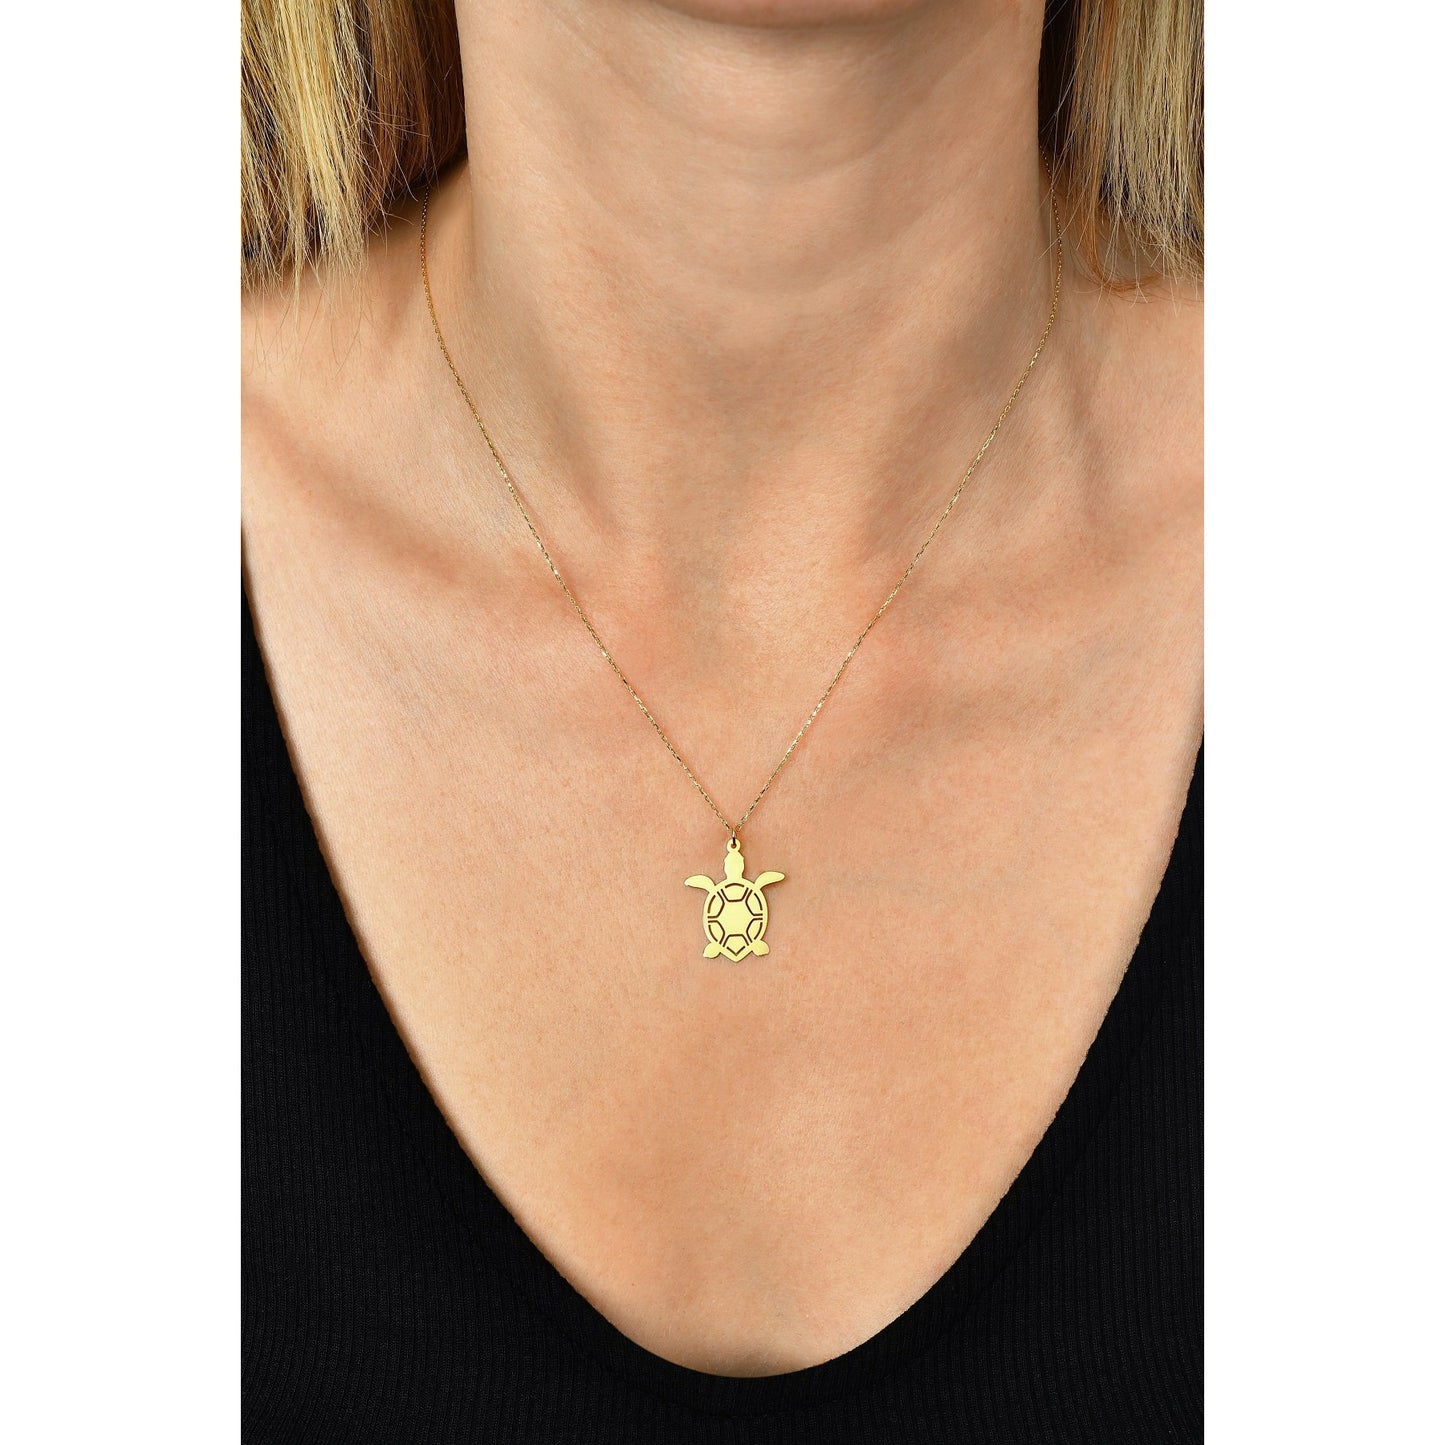 Special Design Gift 14k Gold Turtle Necklace 